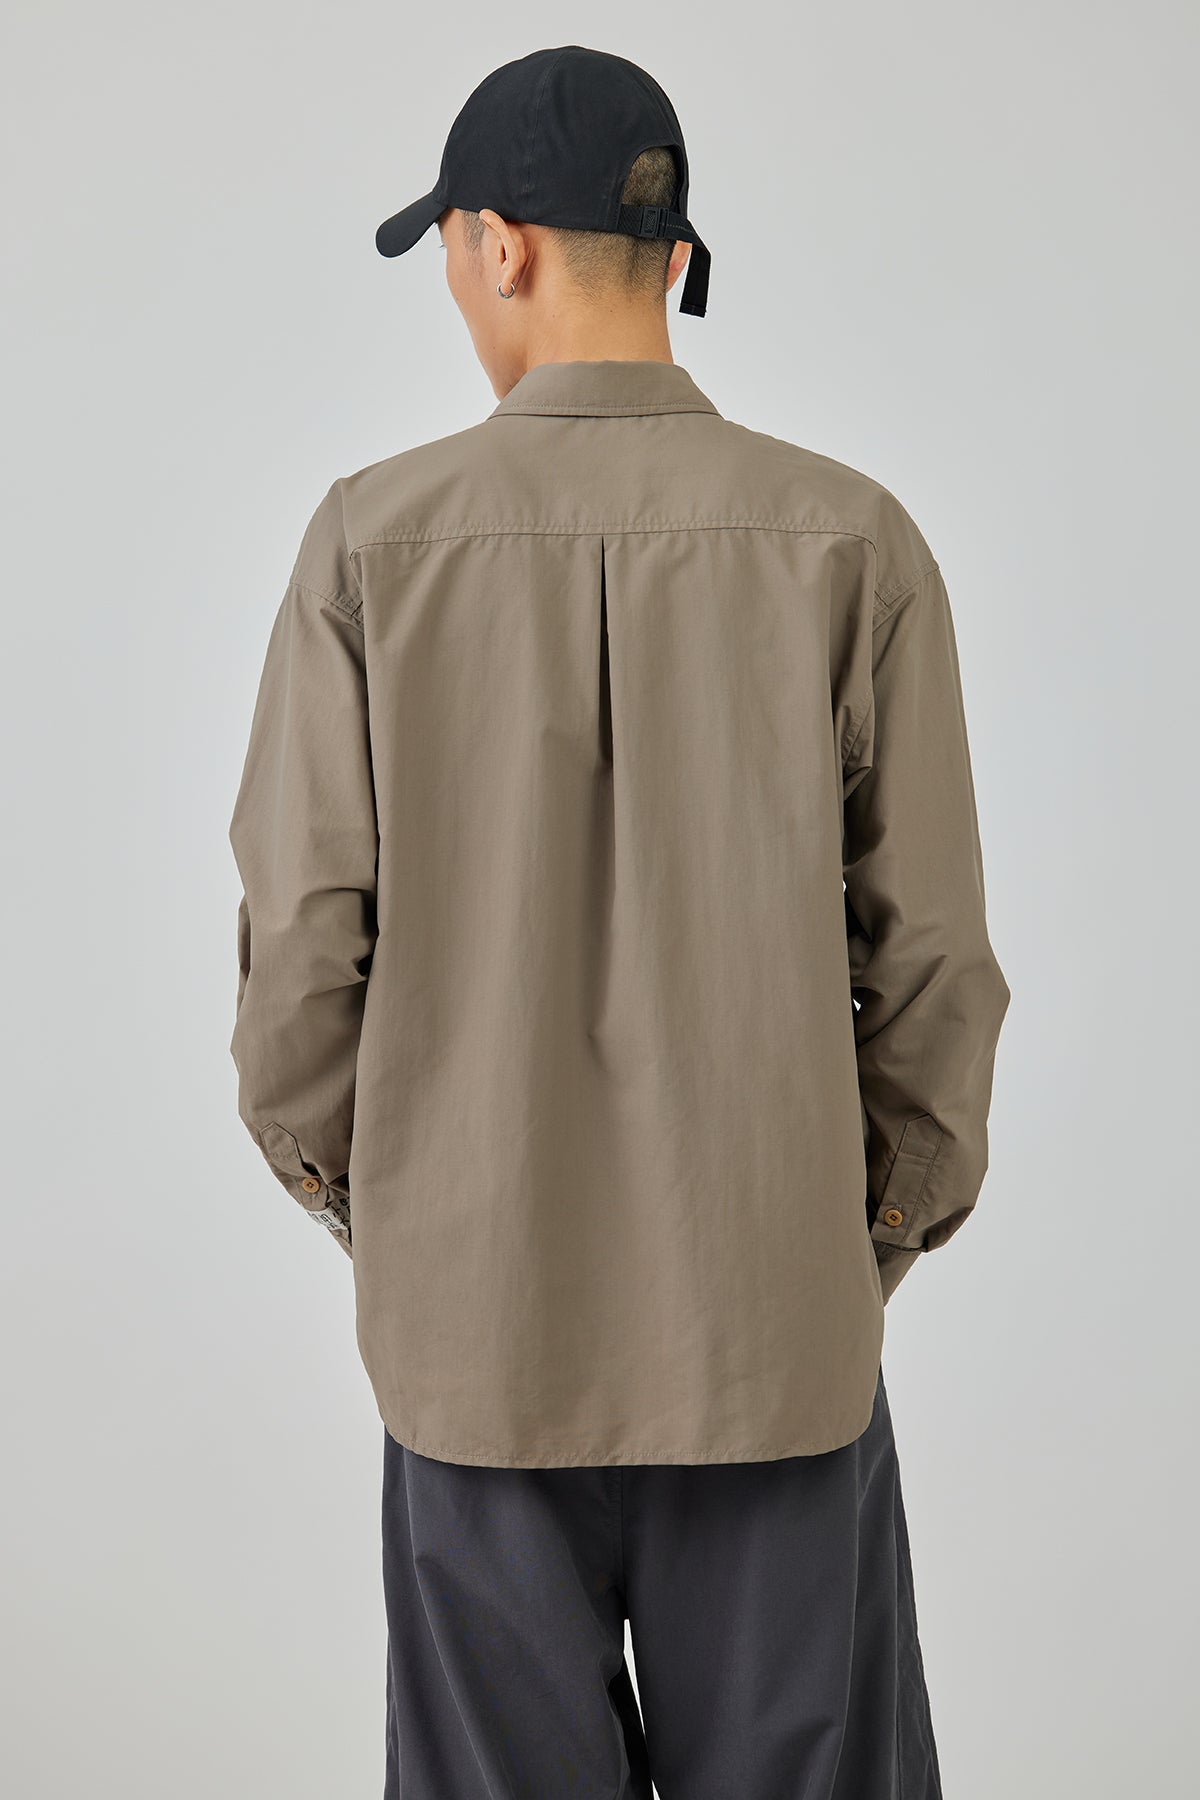 Olive Drab Multi-Pocket Shirt